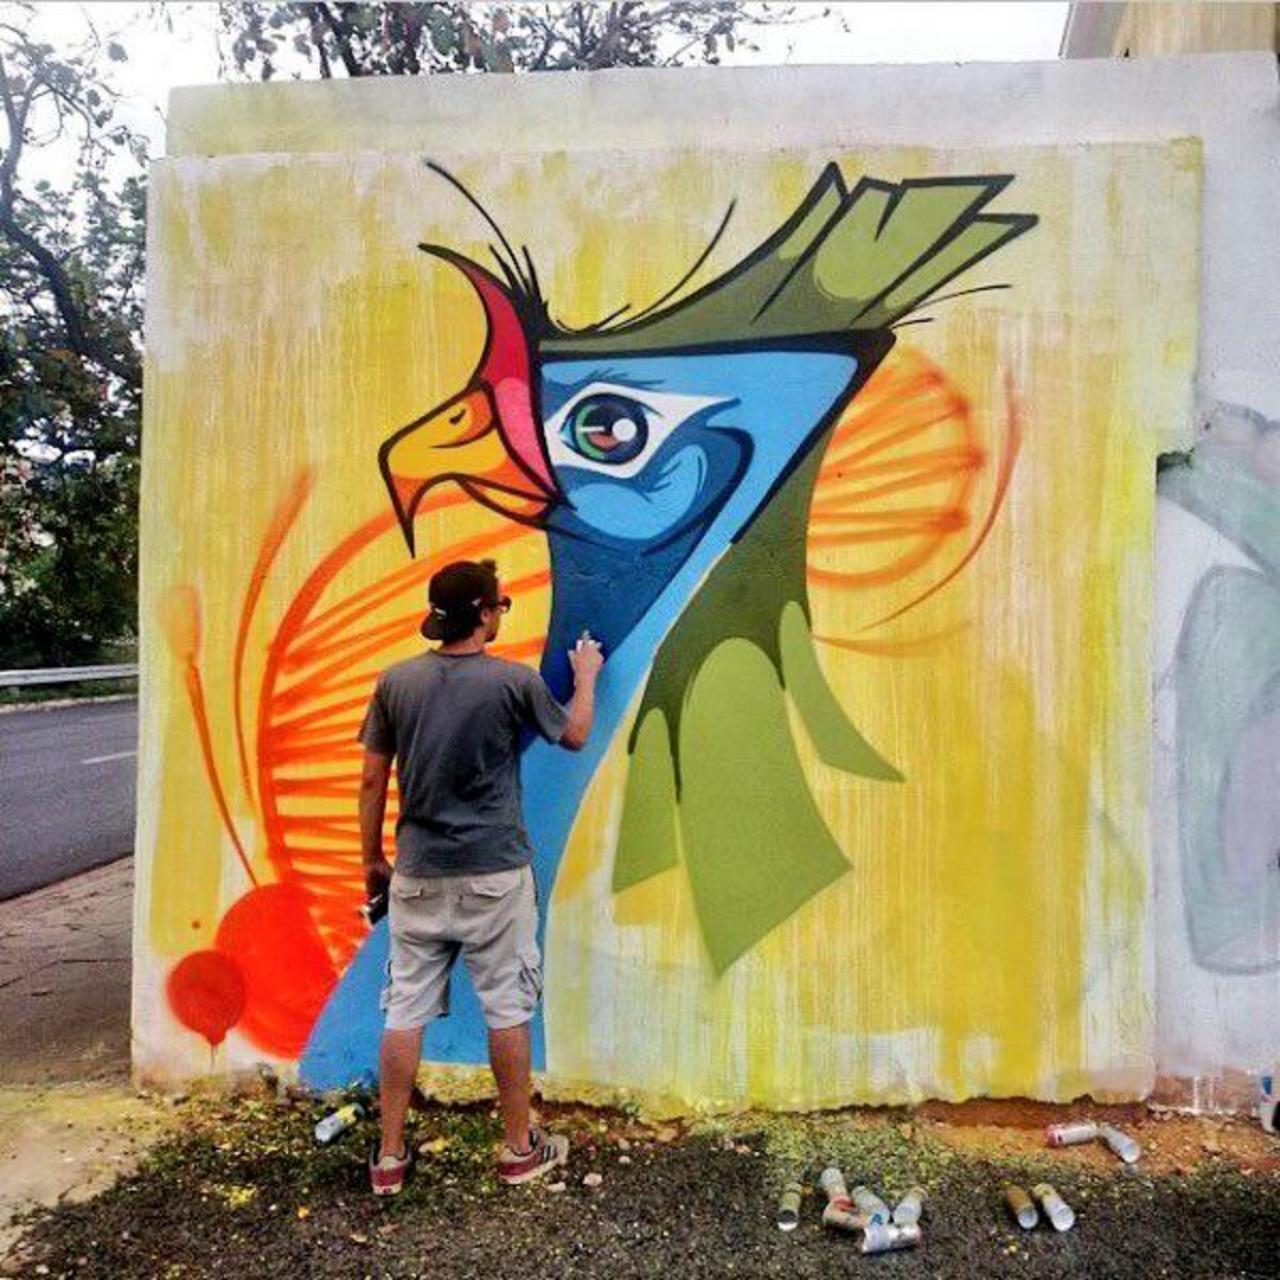 RT @elkland3stilo: Fernando Garroux
Sao Paulo, Brazil
#streetart #art #graffiti #mural http://t.co/7zIedAFJyg